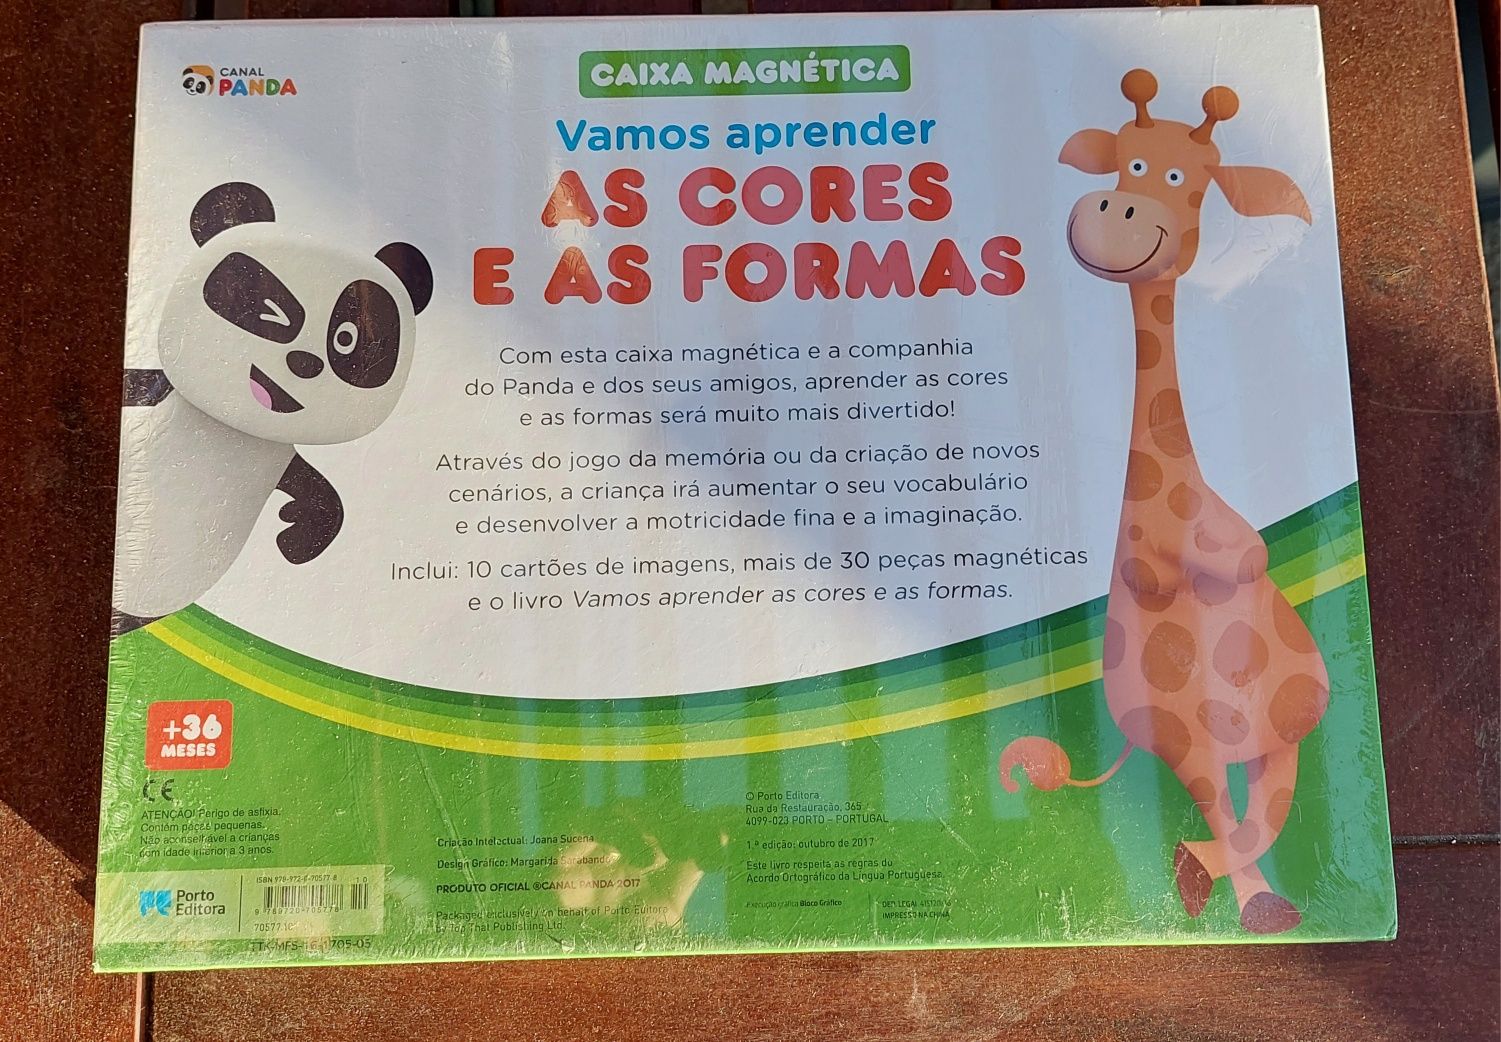 Jogos - Canal Panda Portugal